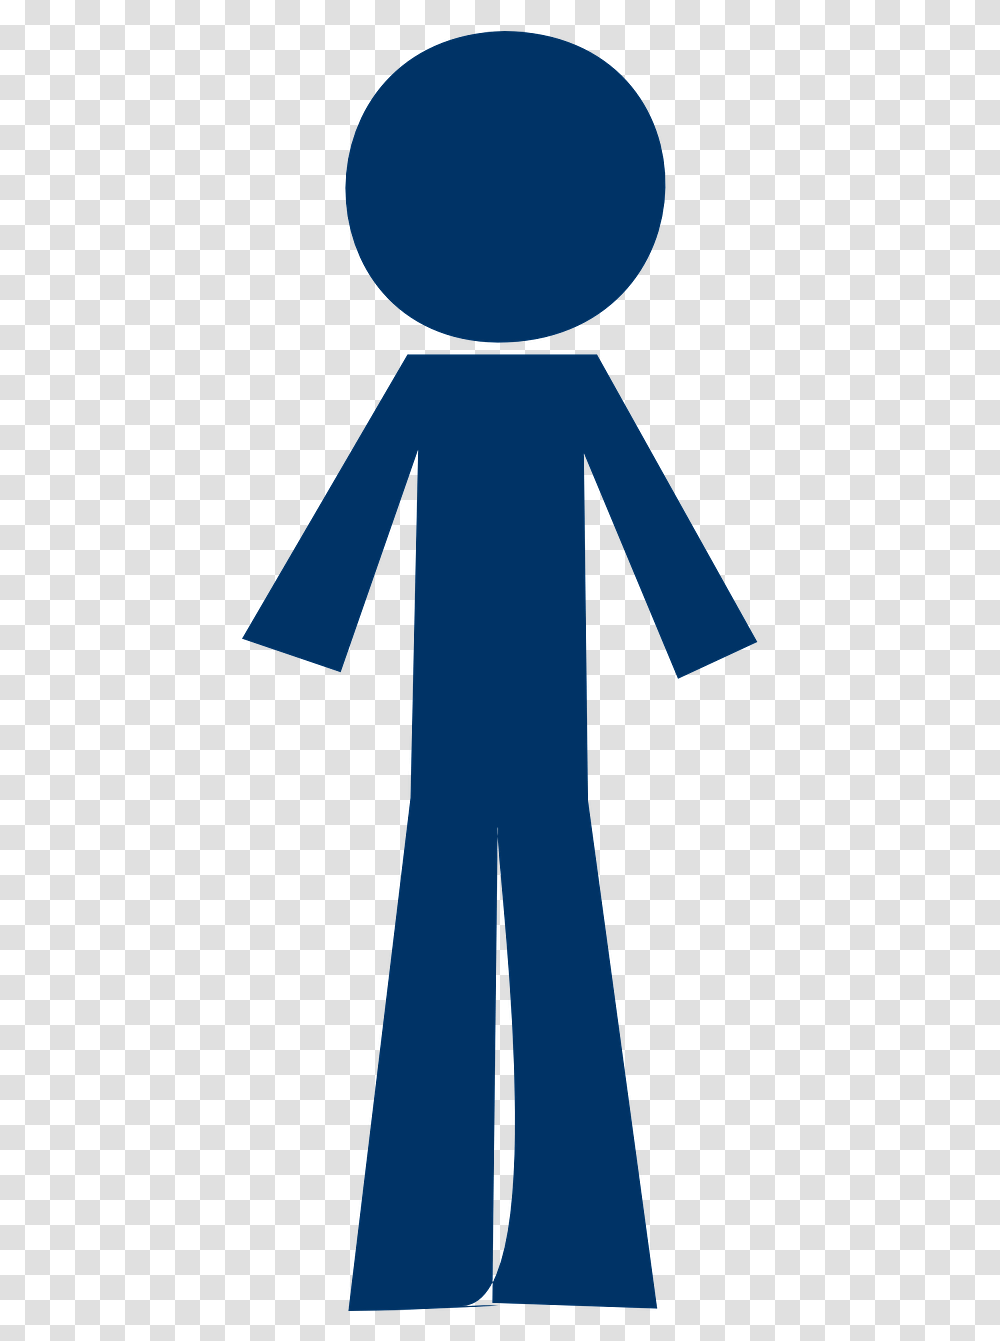 Stick Person User Stick Man Person Navy Blue Navy Blue Stick Figure, Apparel, Coat, Sleeve Transparent Png